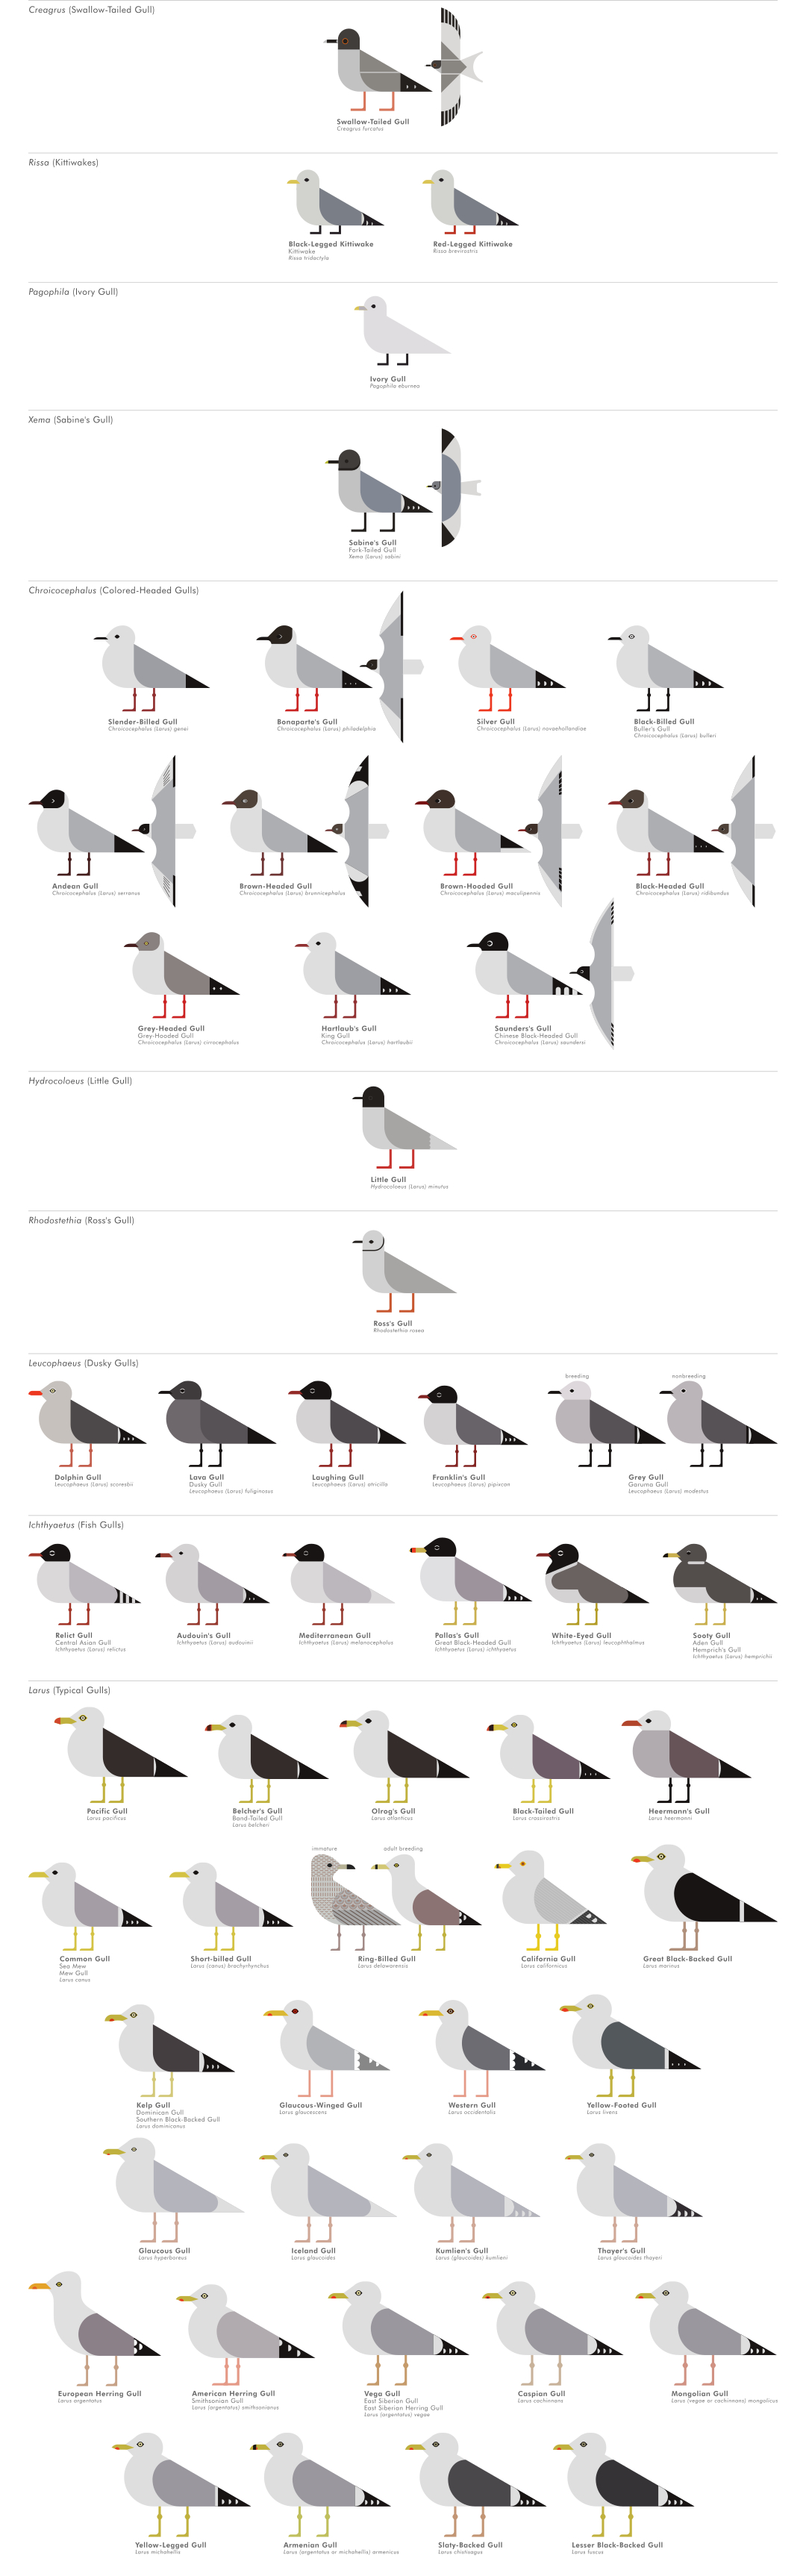 scott partridge - ave - avian vector encyclopedia - gulls - vector bird art